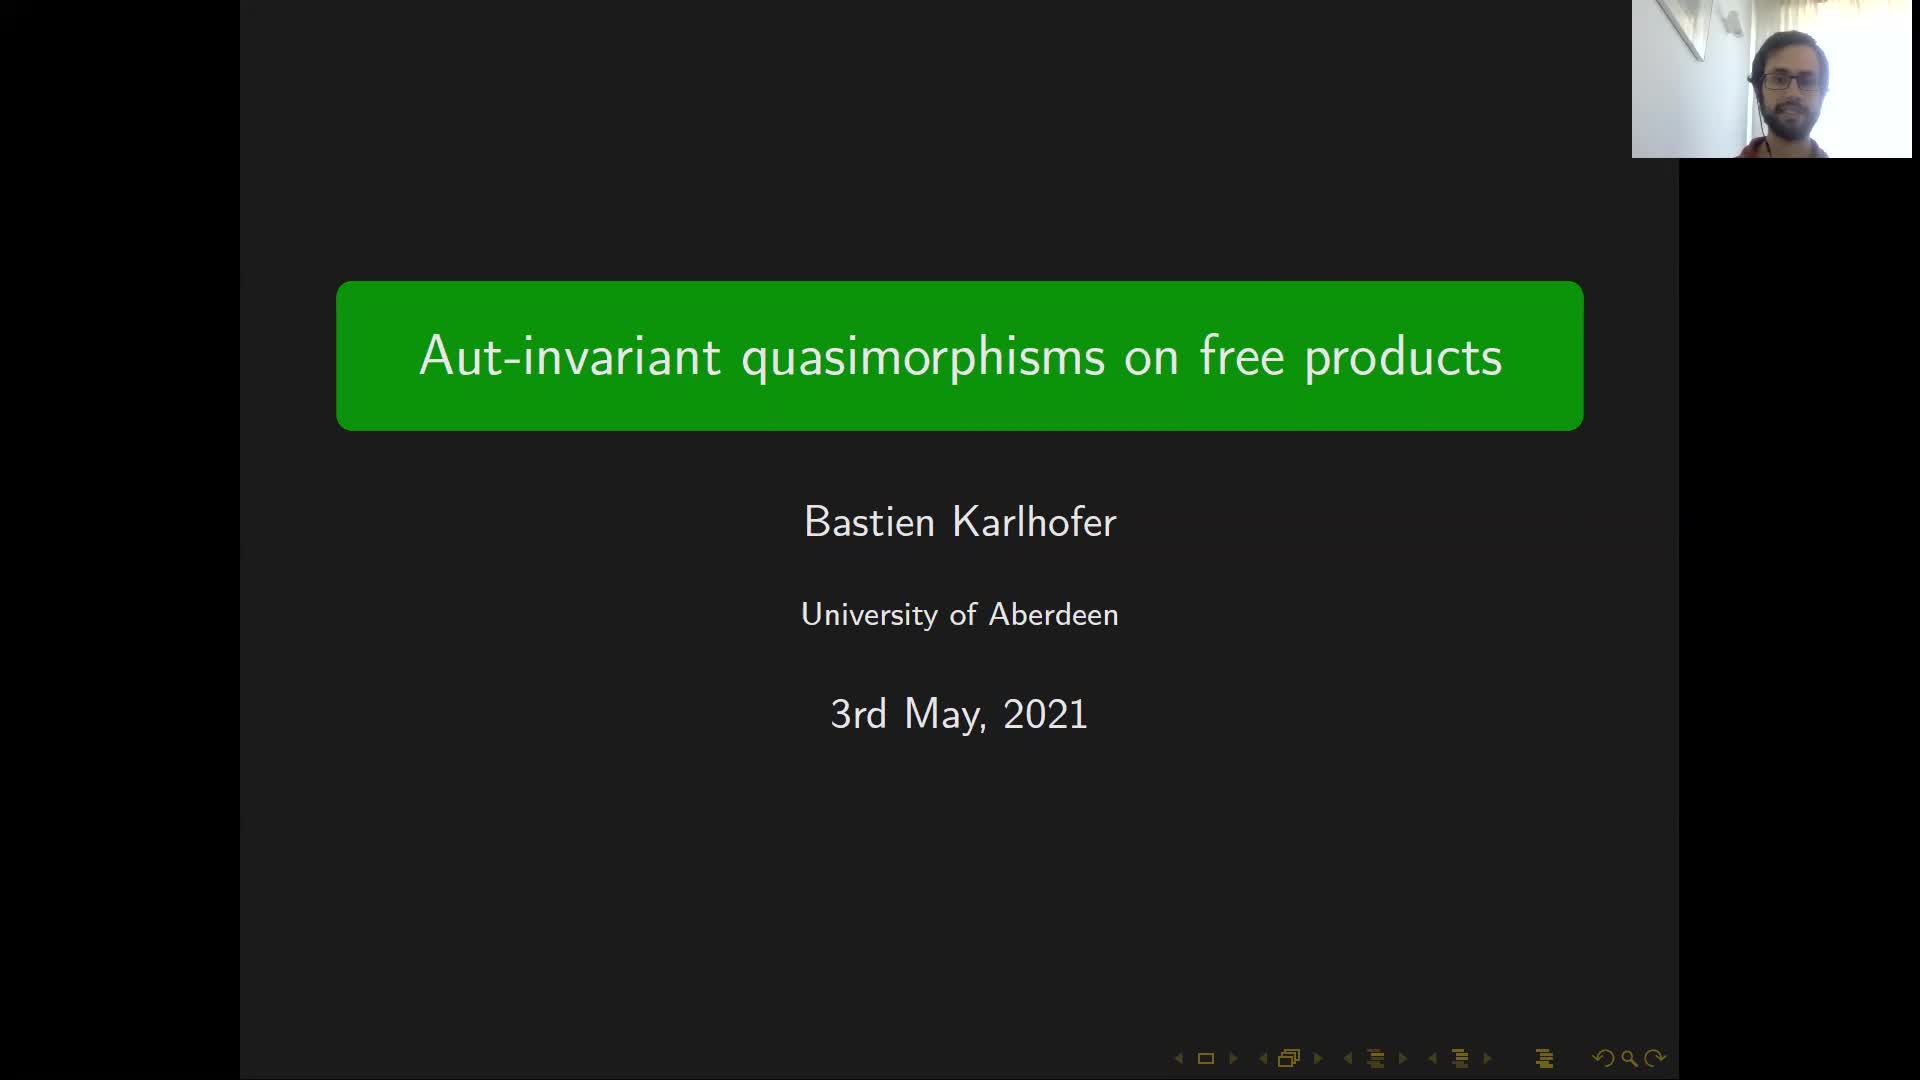 Aut-invariant quasimorphisms on free products